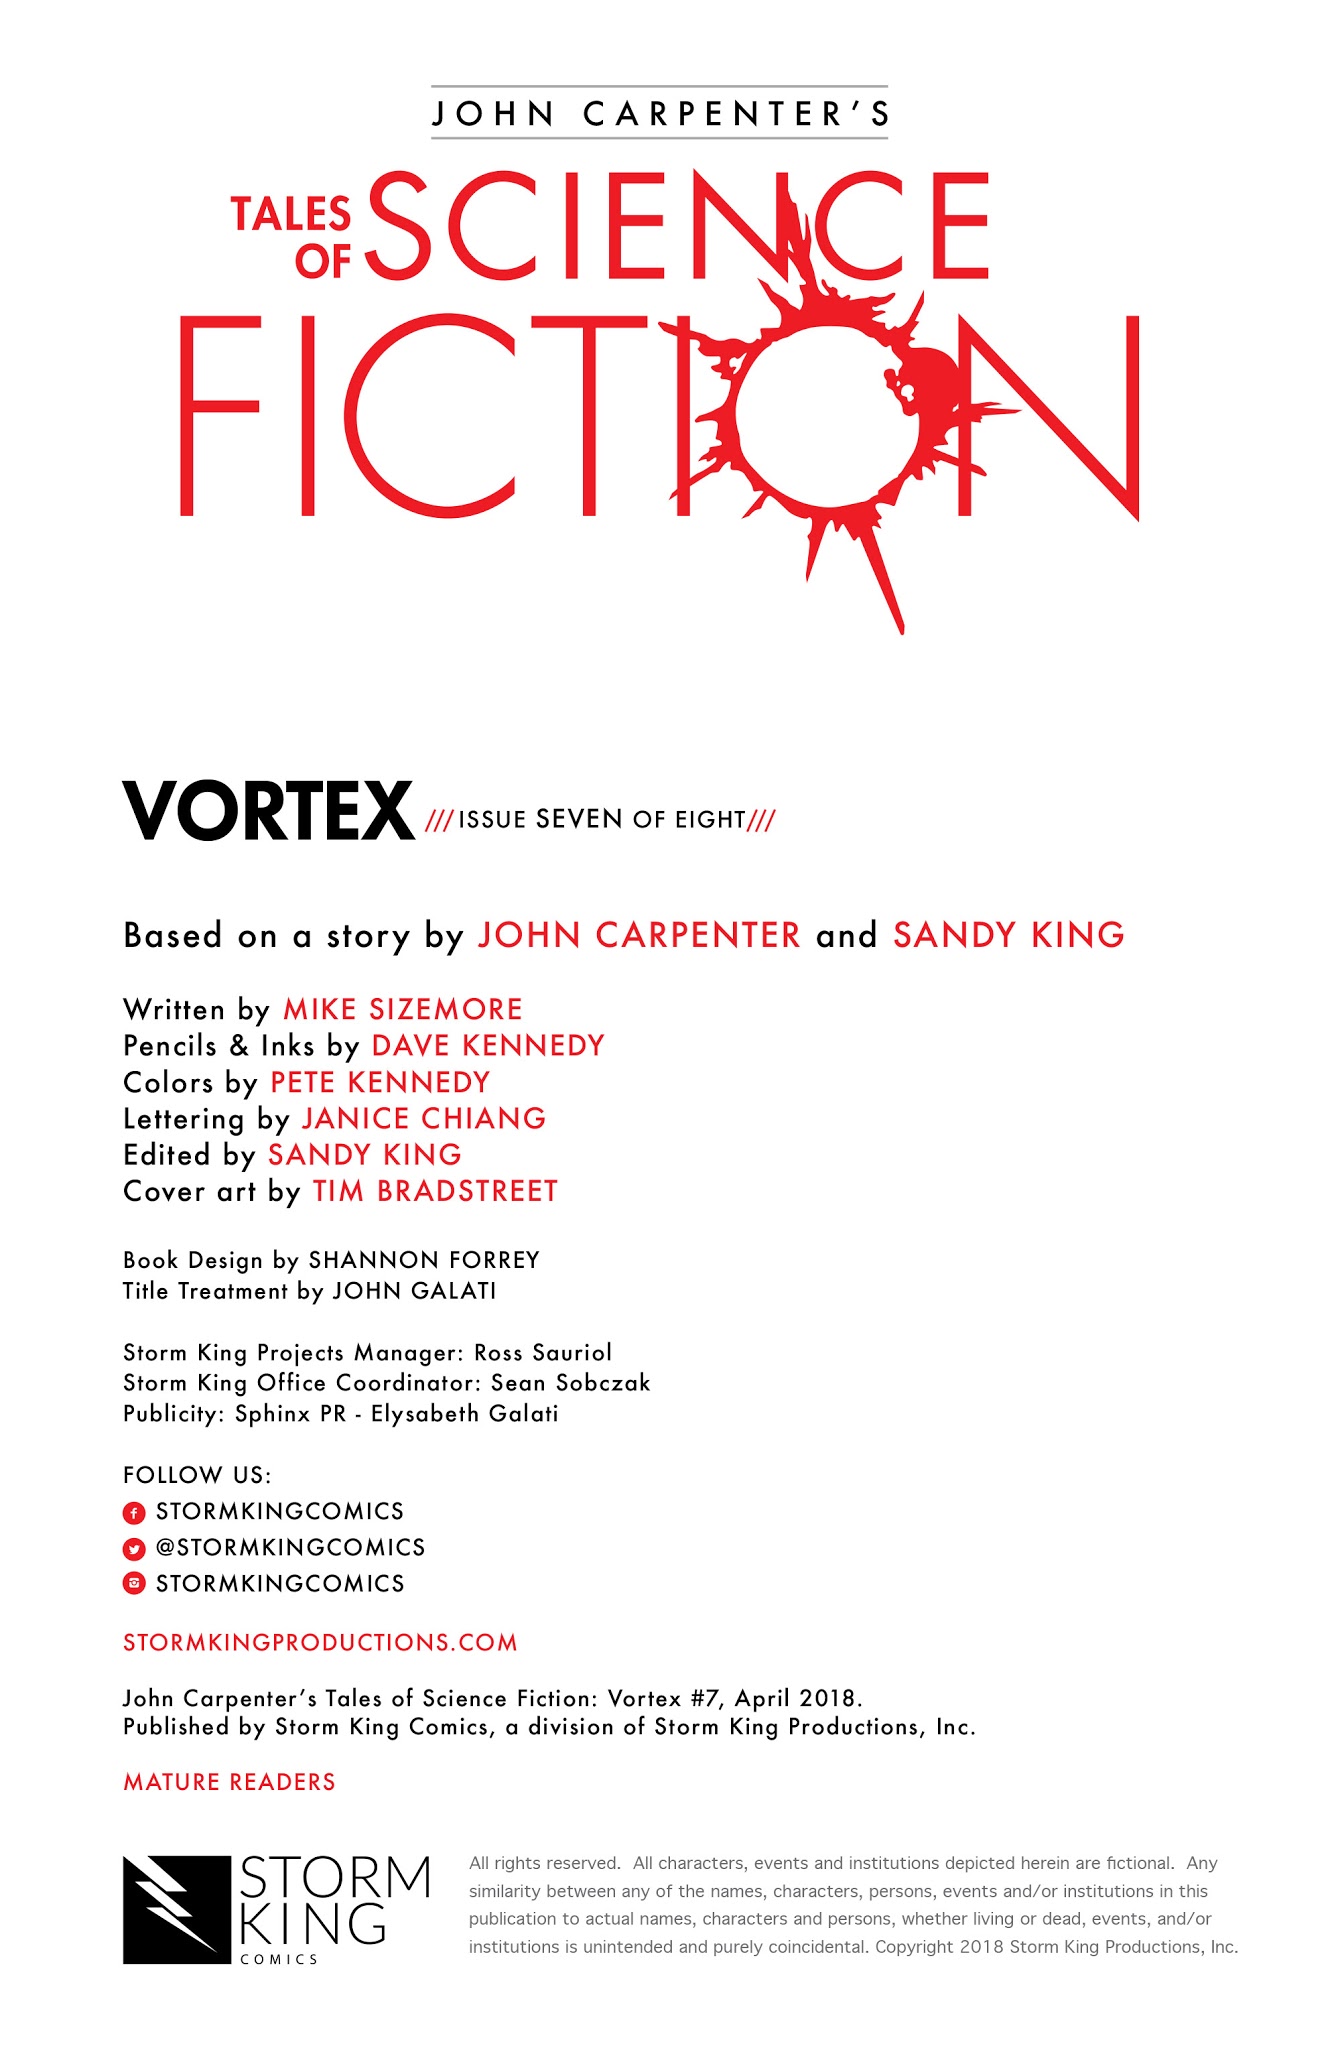 Read online John Carpenter's Tales of Science Fiction: Vortex comic -  Issue #7 - 2